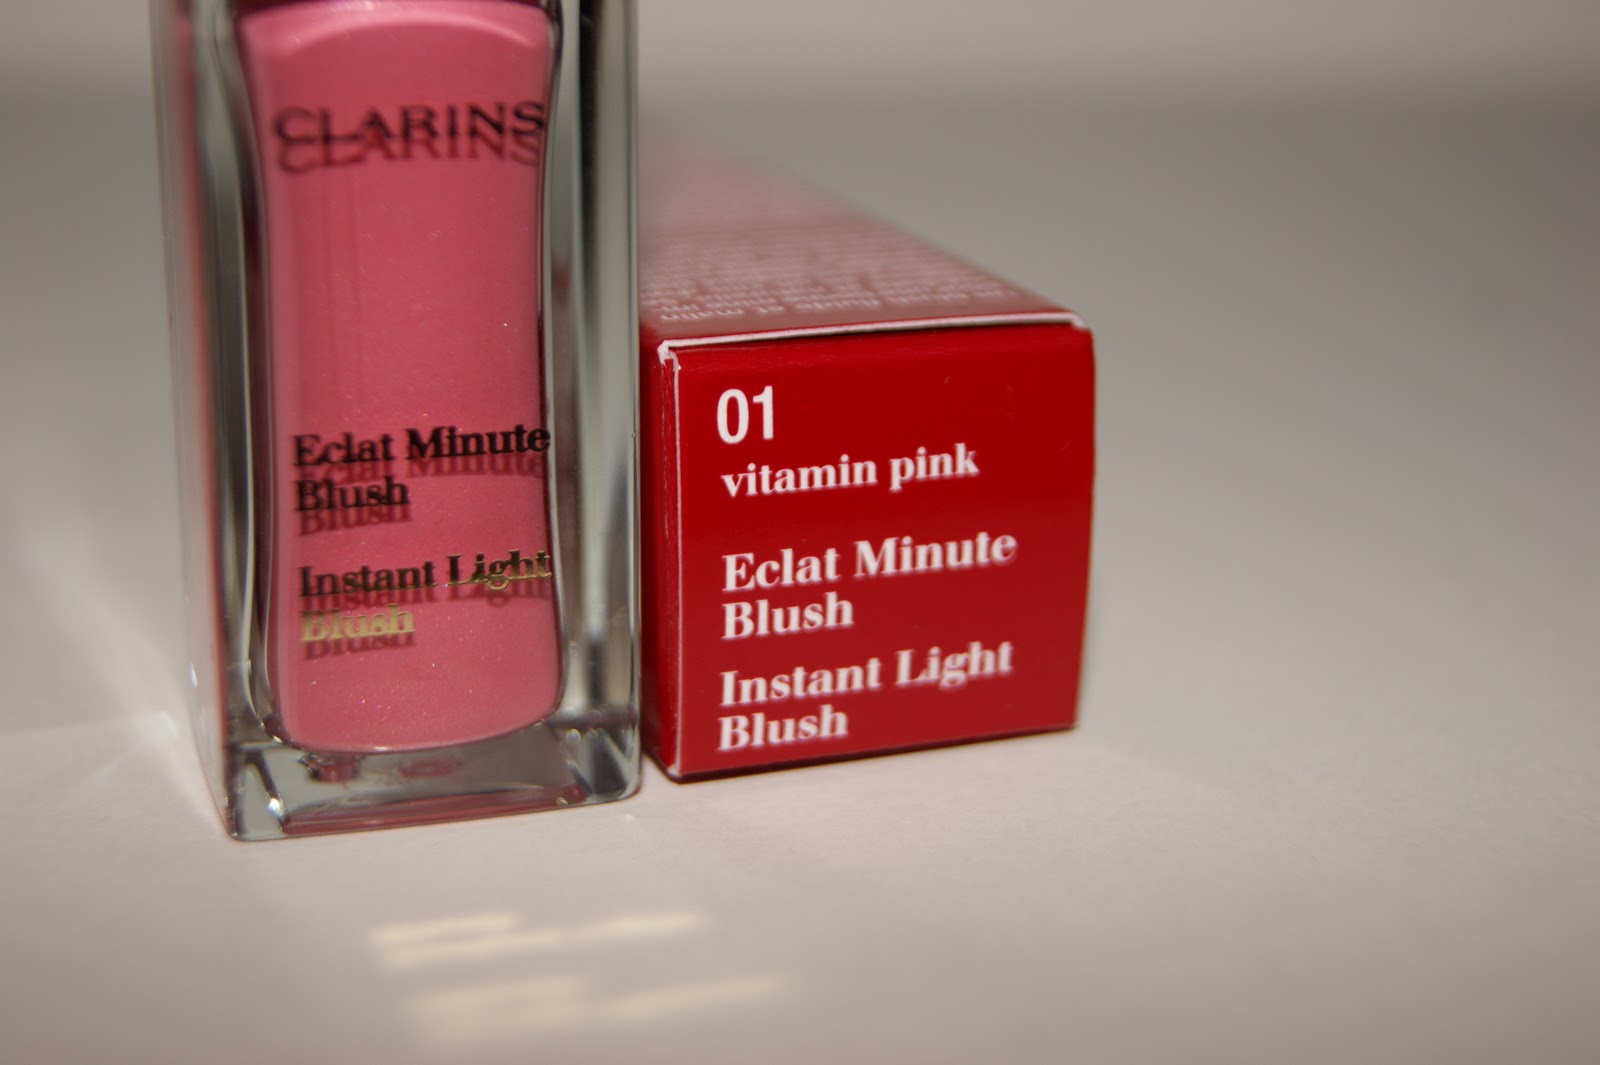 http://2.bp.blogspot.com/--nU7uhLSSuA/Tyndtqv9MjI/AAAAAAAAKQE/NZen8arSZoI/s1600/Clarins+Instant+Light+Blush+in+Vitamin+Pink+003.jpg